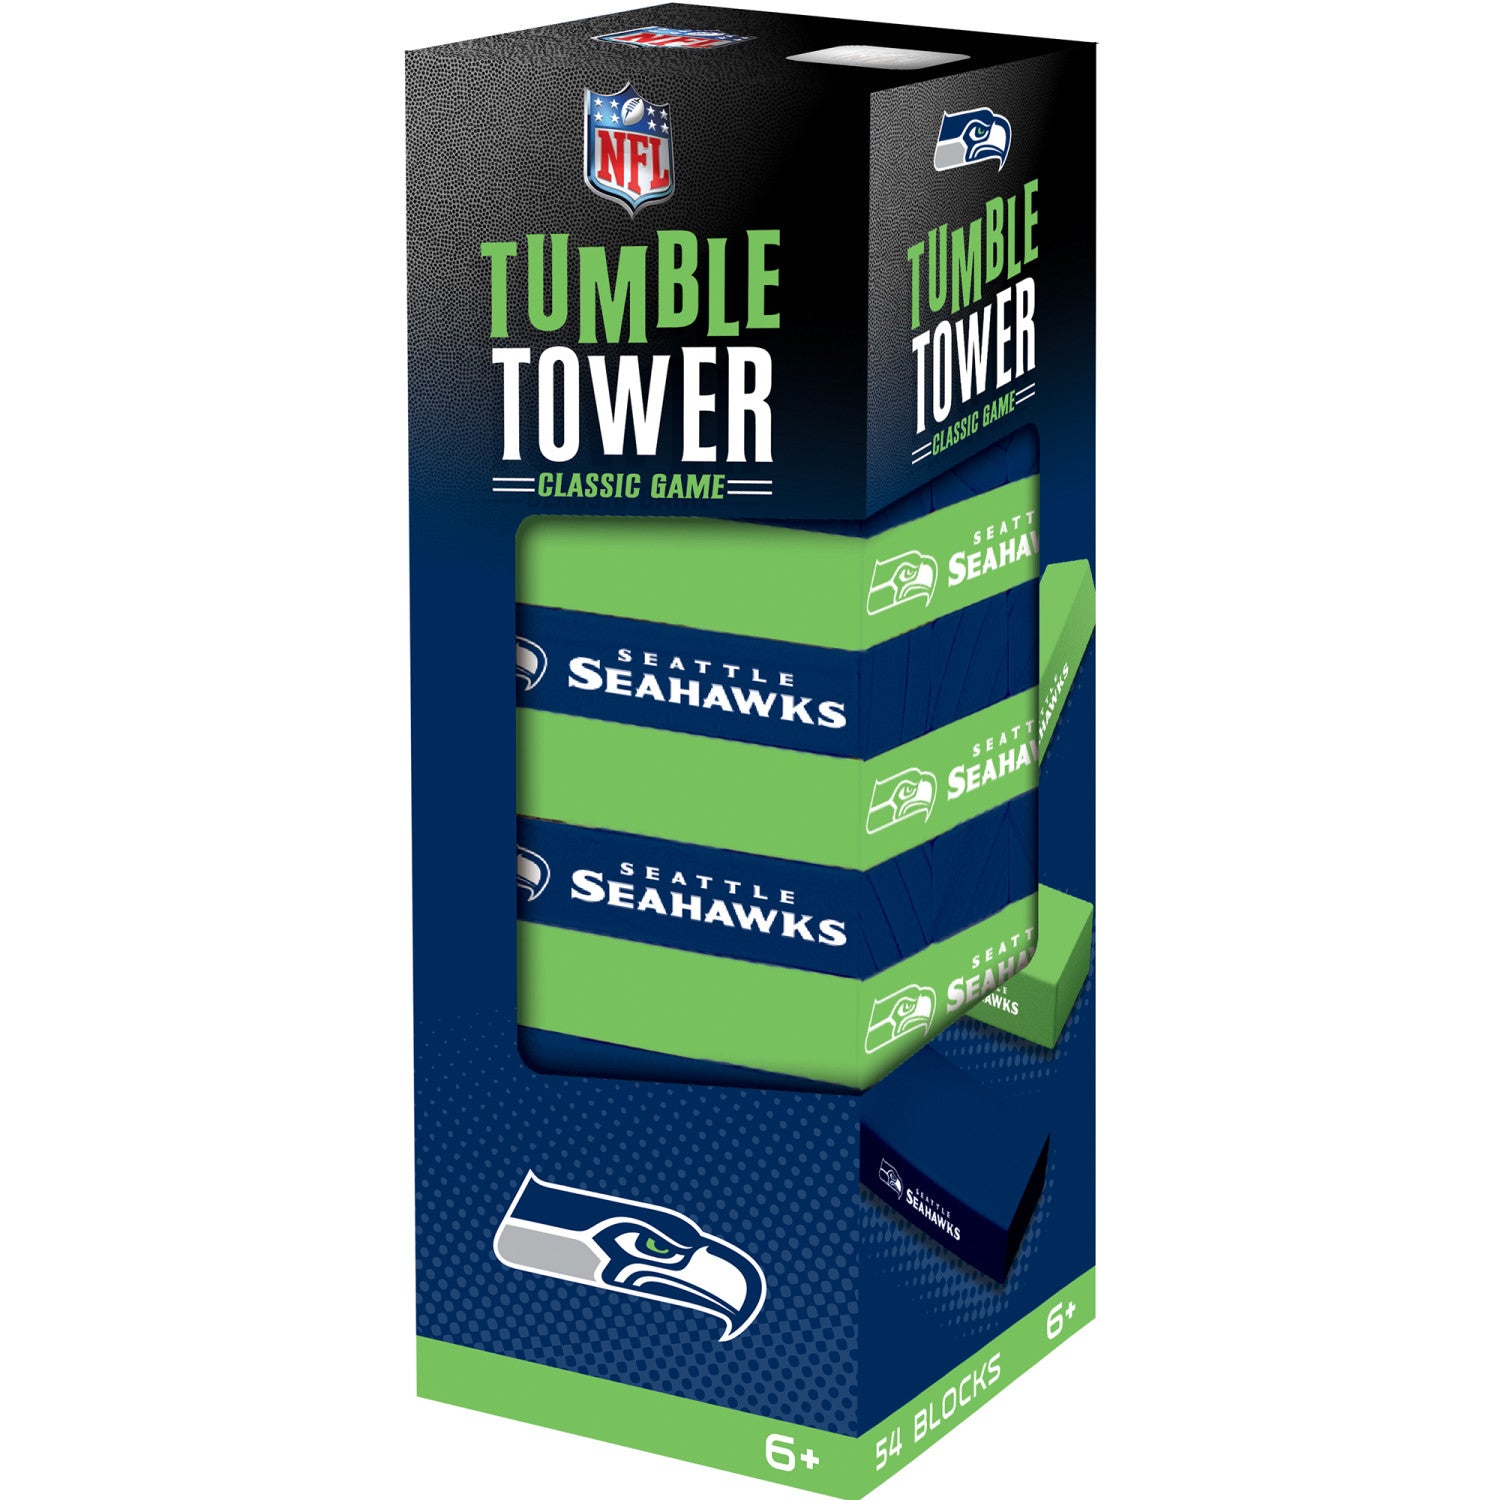 Seattle Seahawks Tumble Tower